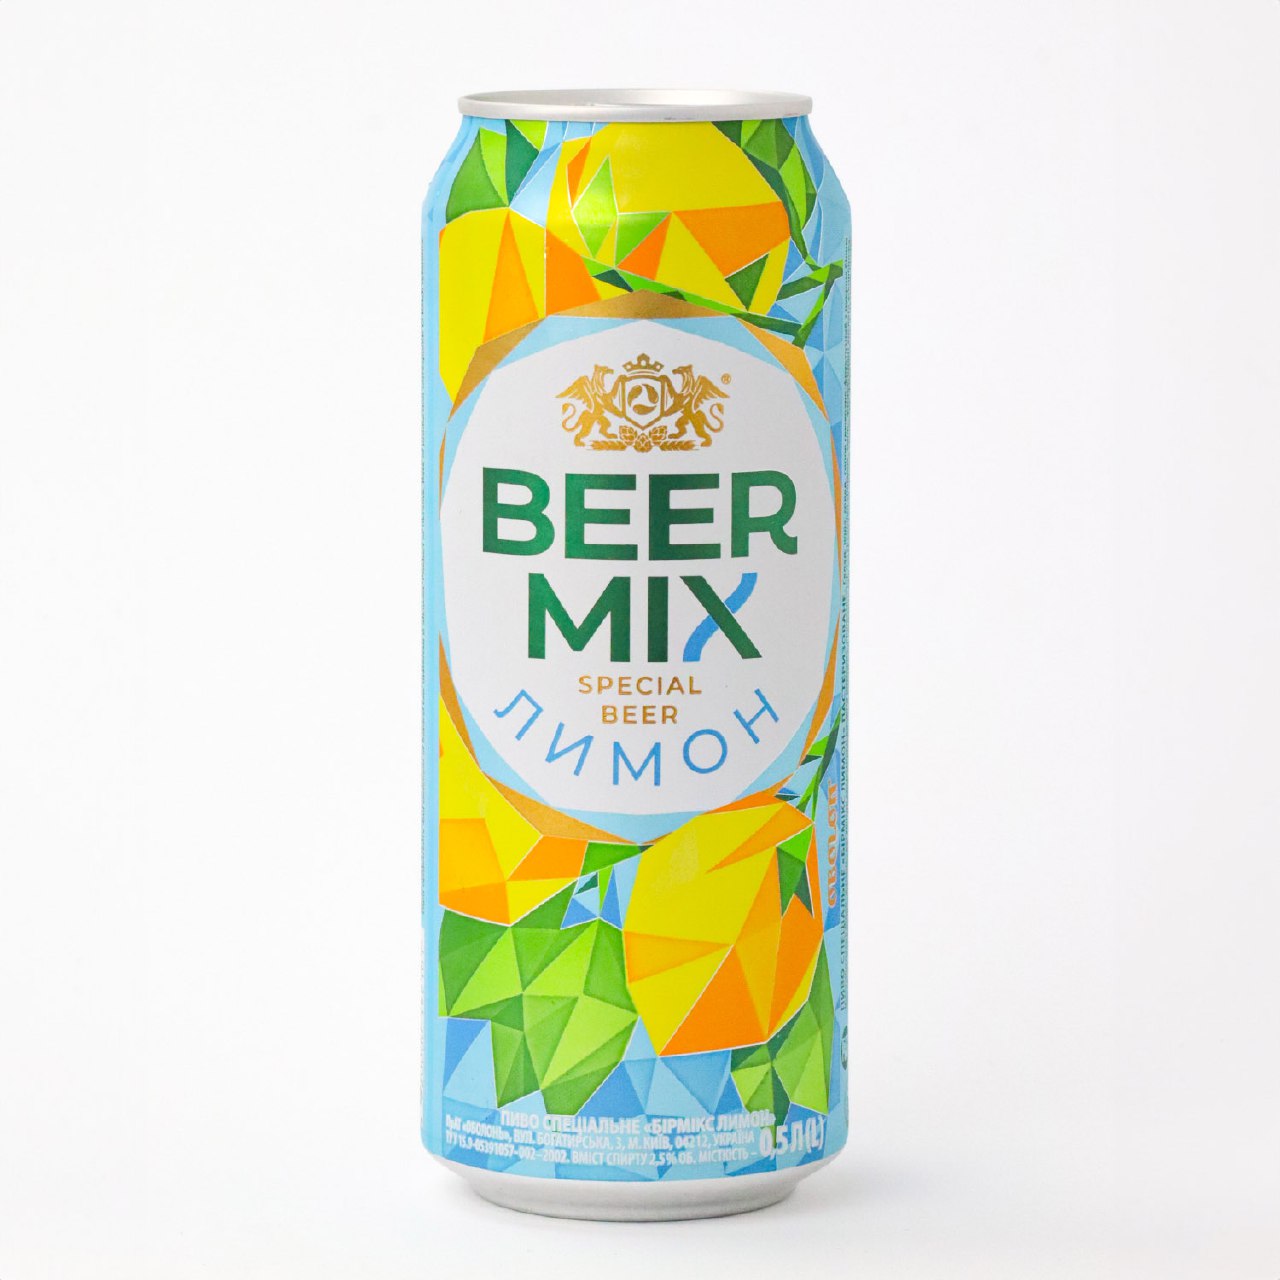 Special flavored beer "Birmix Lemon" pasteurized